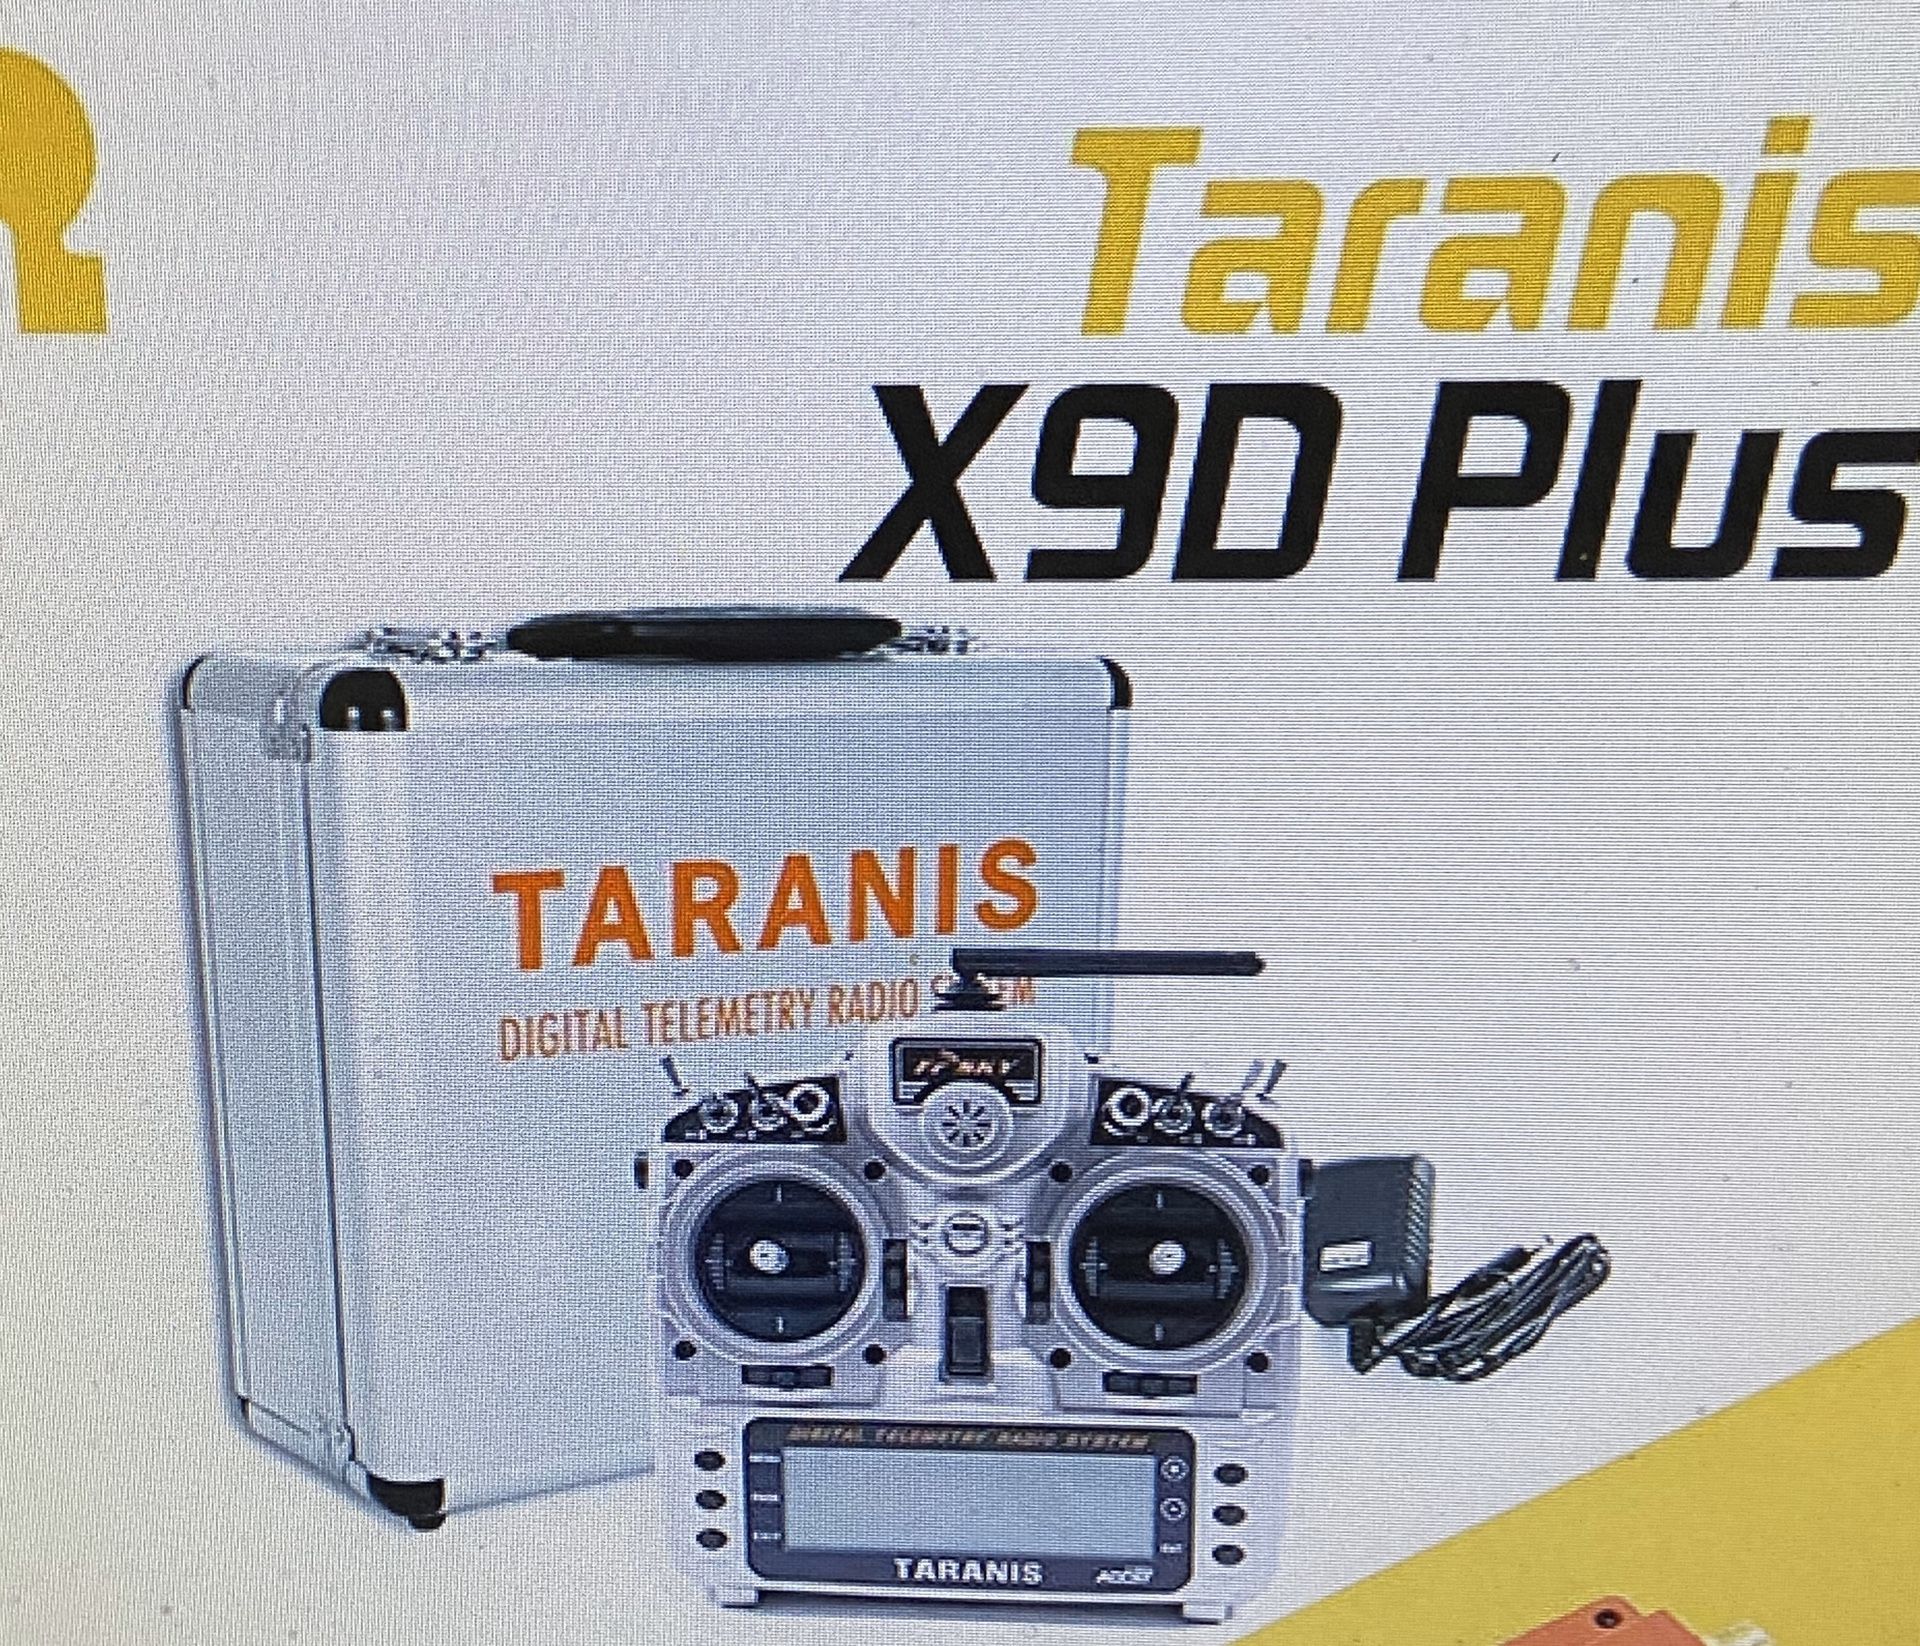 FrSky 2.4ghz ACCST Taranis X9D Plus transmitter case and R9M